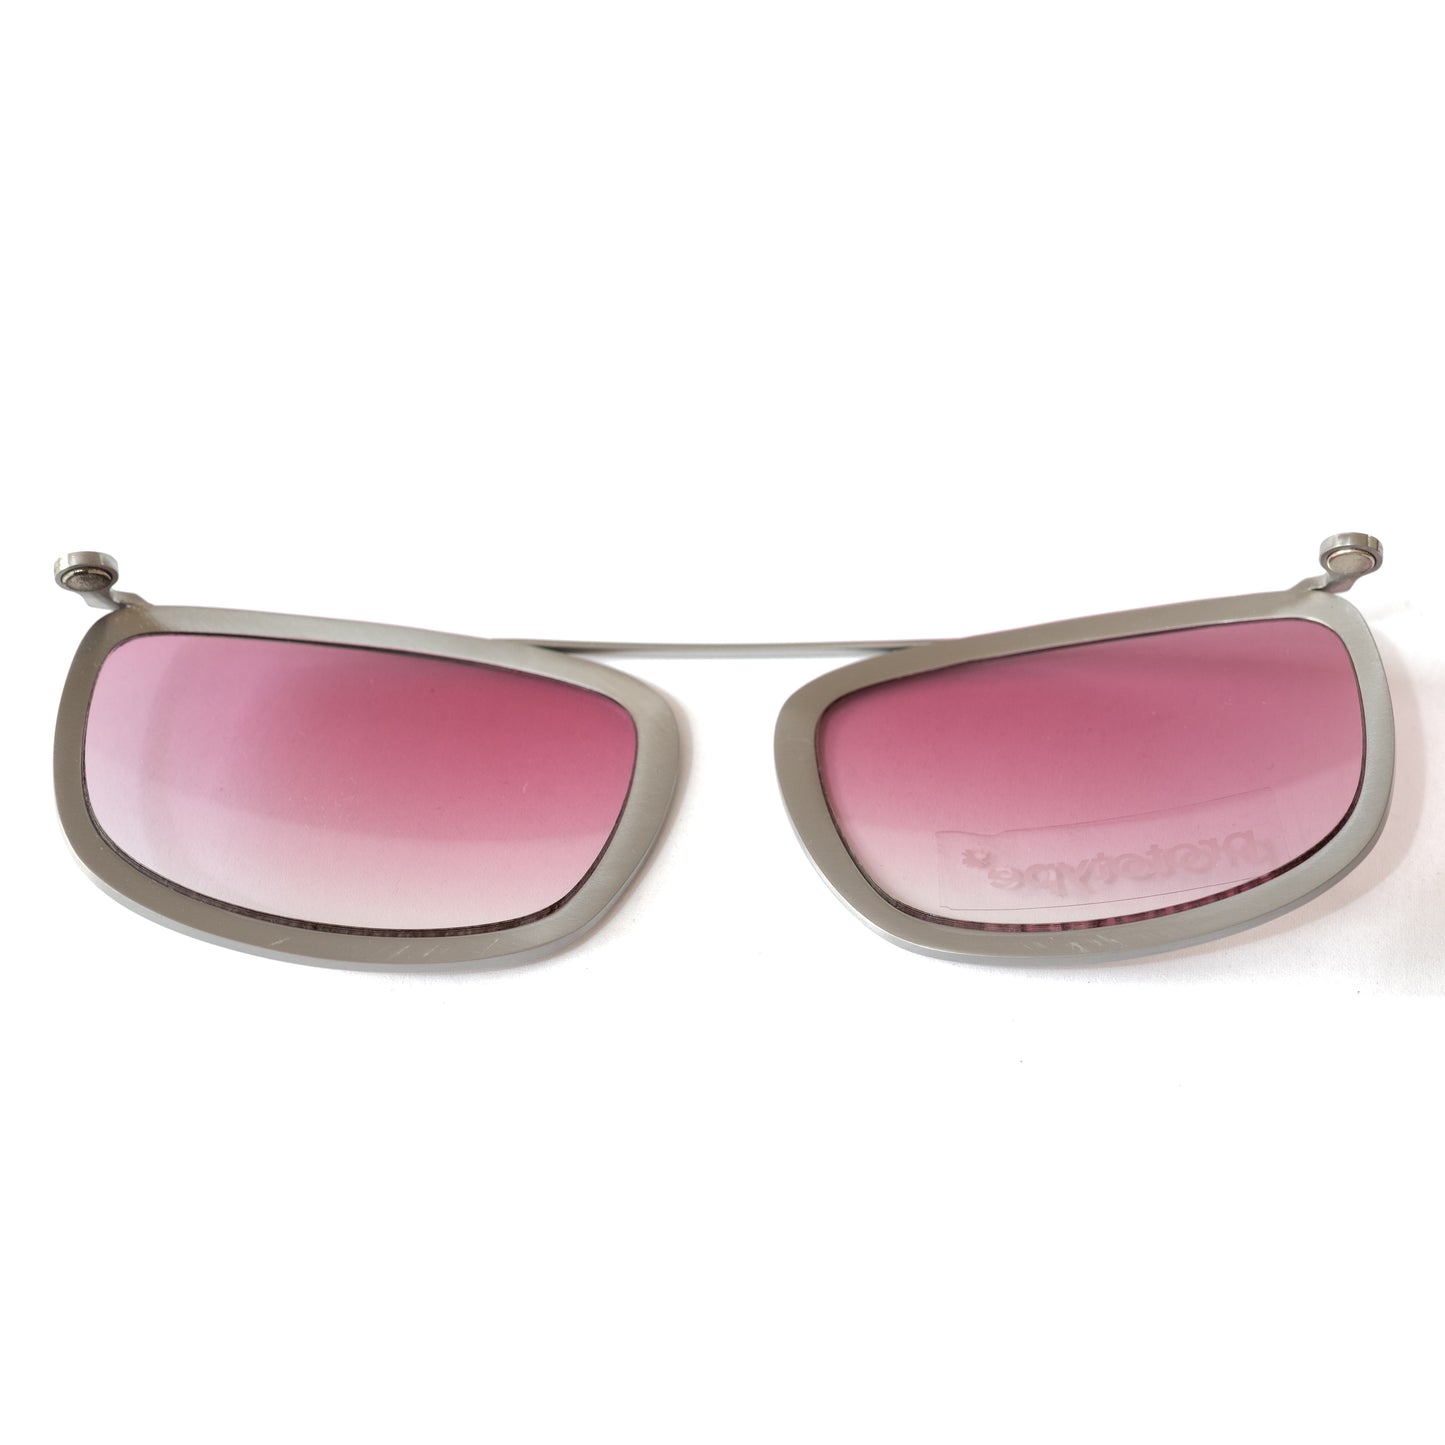 Yohji Yamamoto x Linda Farrow Prototype 2-Way Sunglasses (2009)